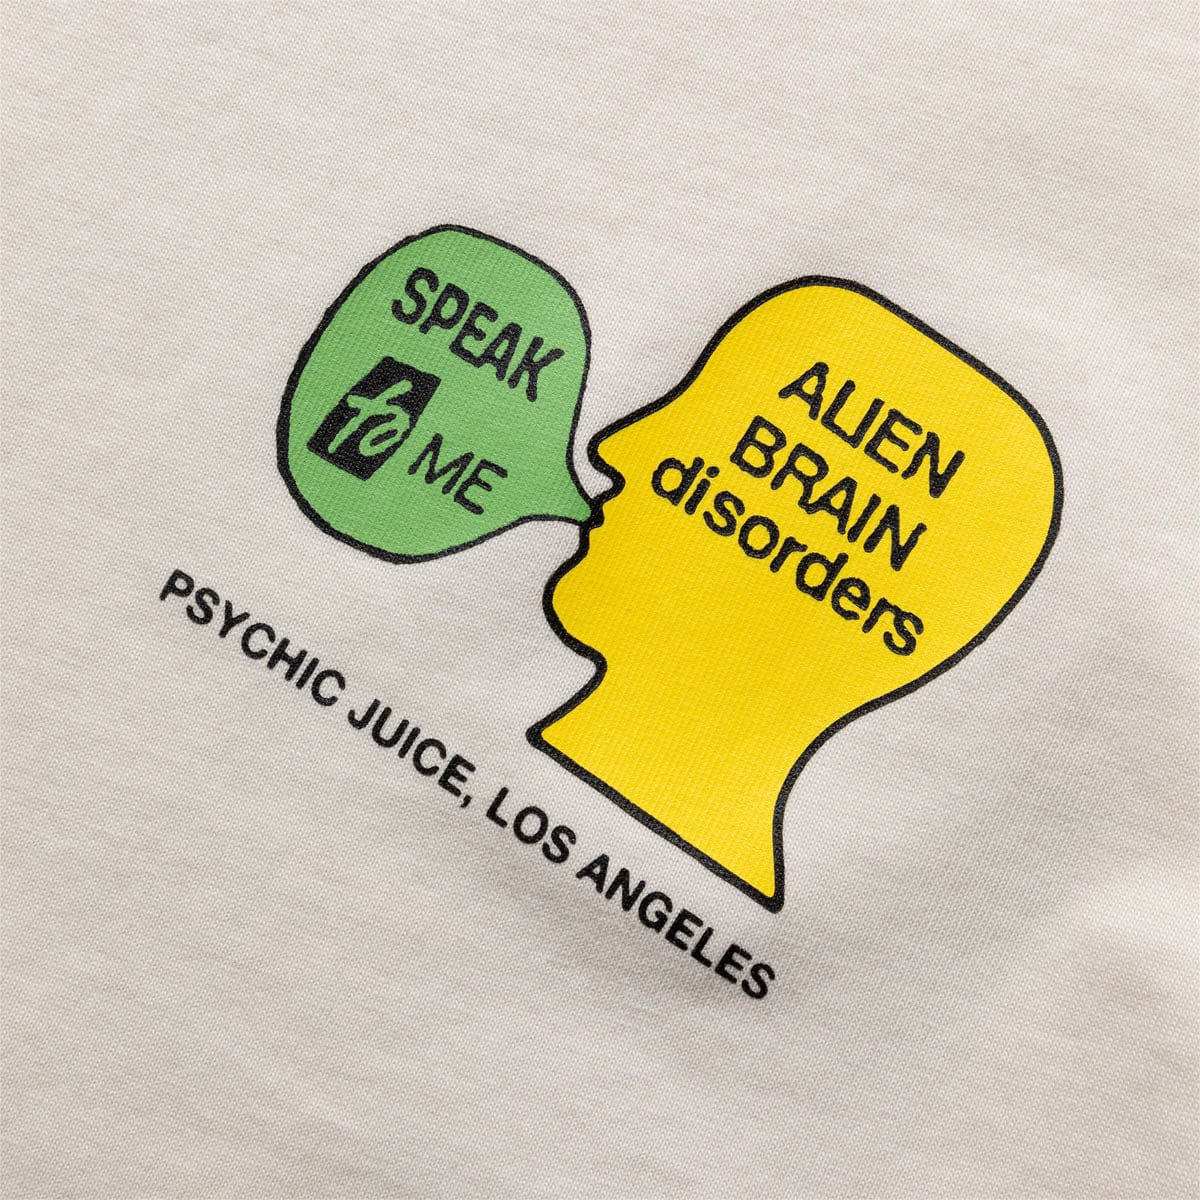 Brain Dead T-Shirts PSYCHIC JUICE T-SHIRT